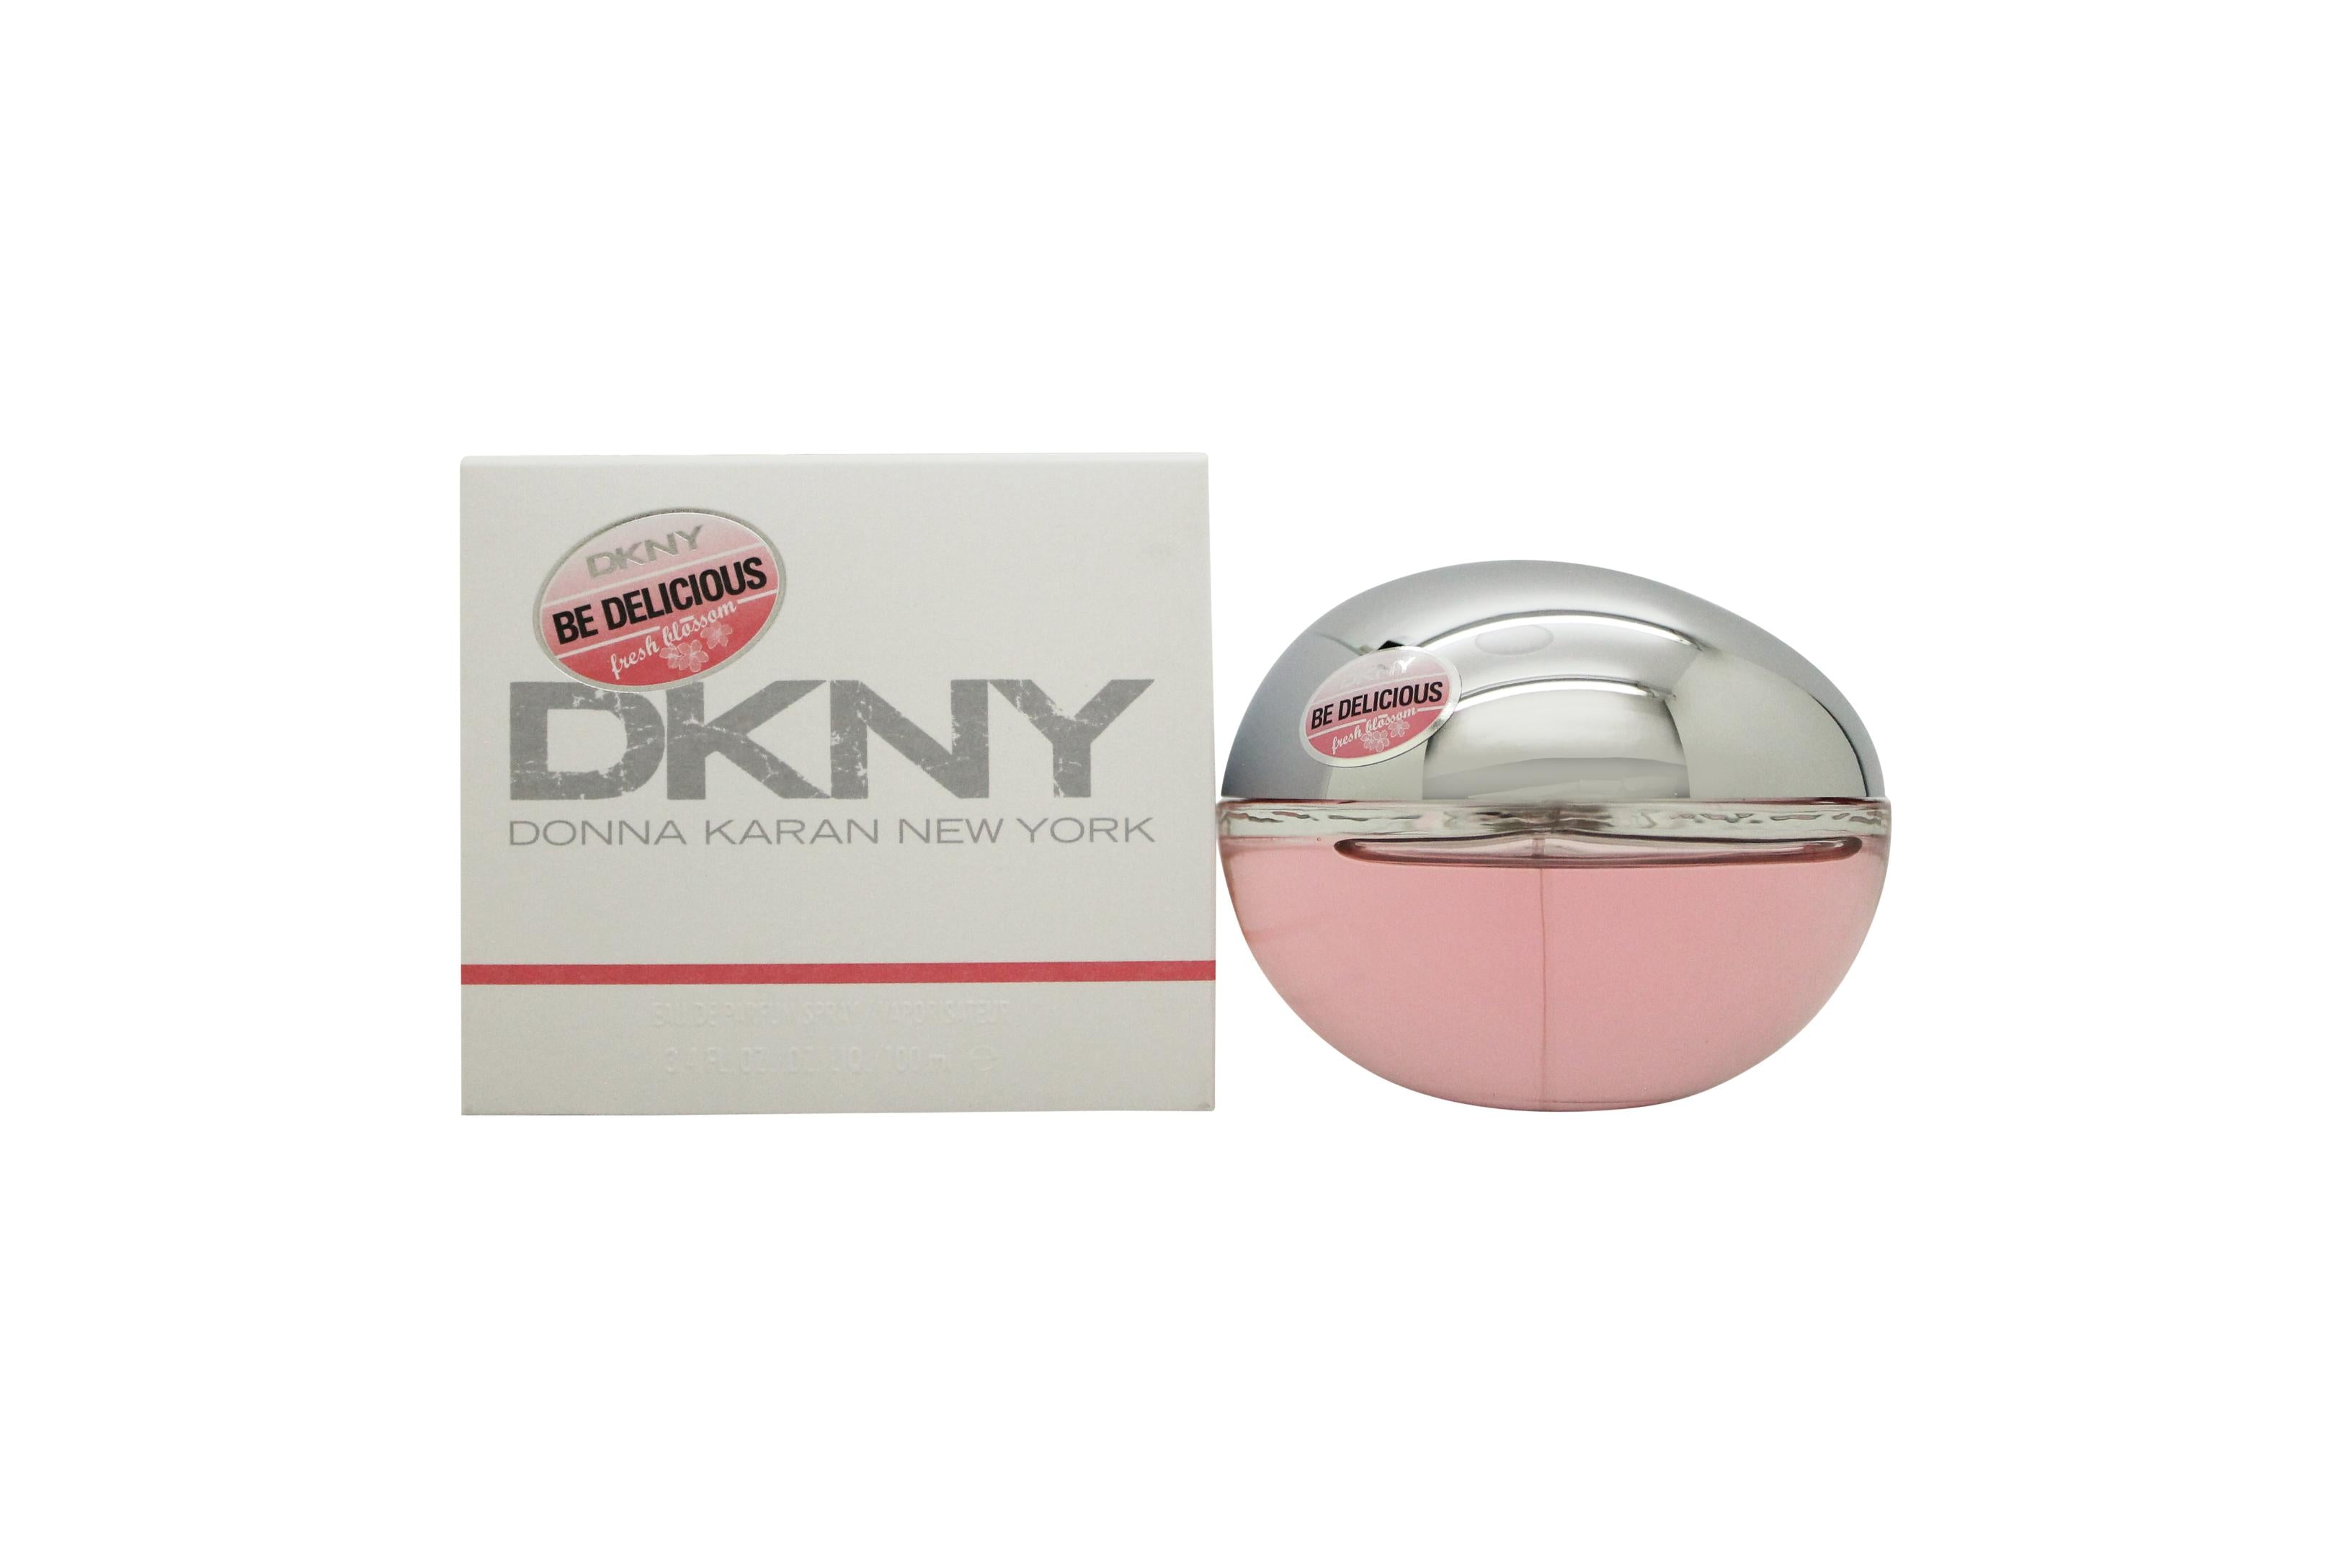 View DKNY Be Delicious Fresh Blossom Eau de Parfum 100ml Spray information